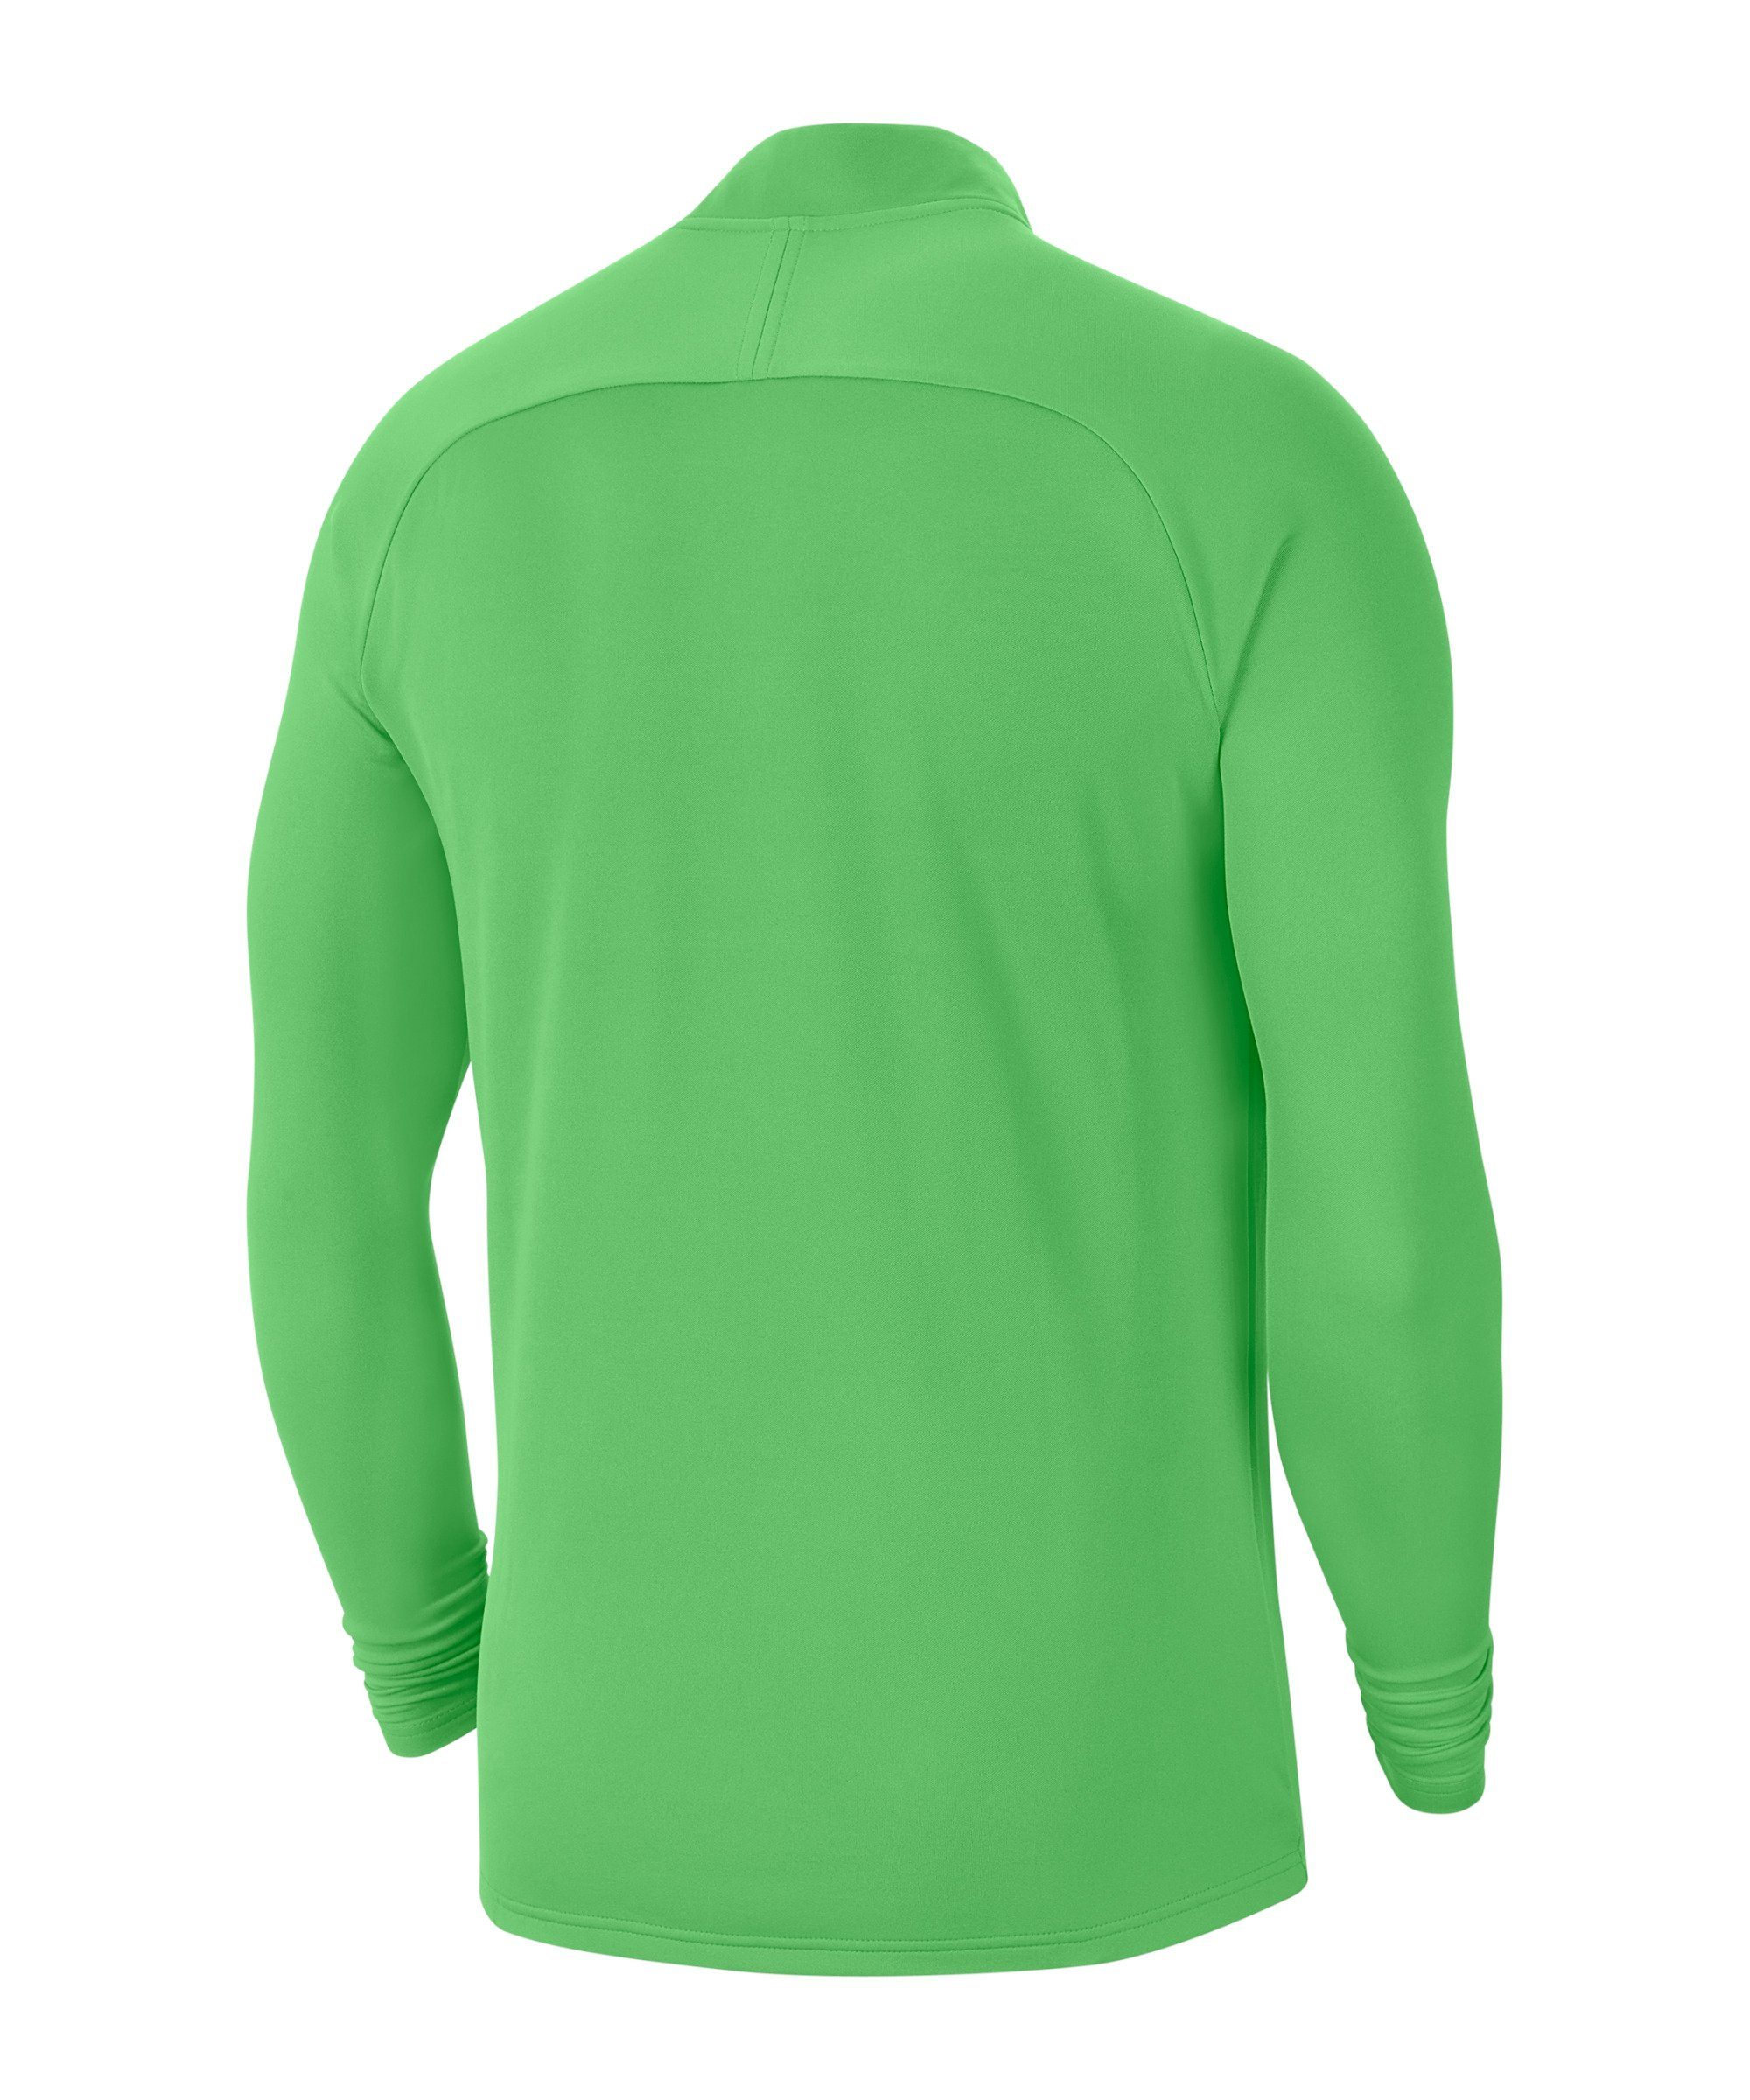 Drill Academy Top gruenweiss 21 Sweatshirt Nike